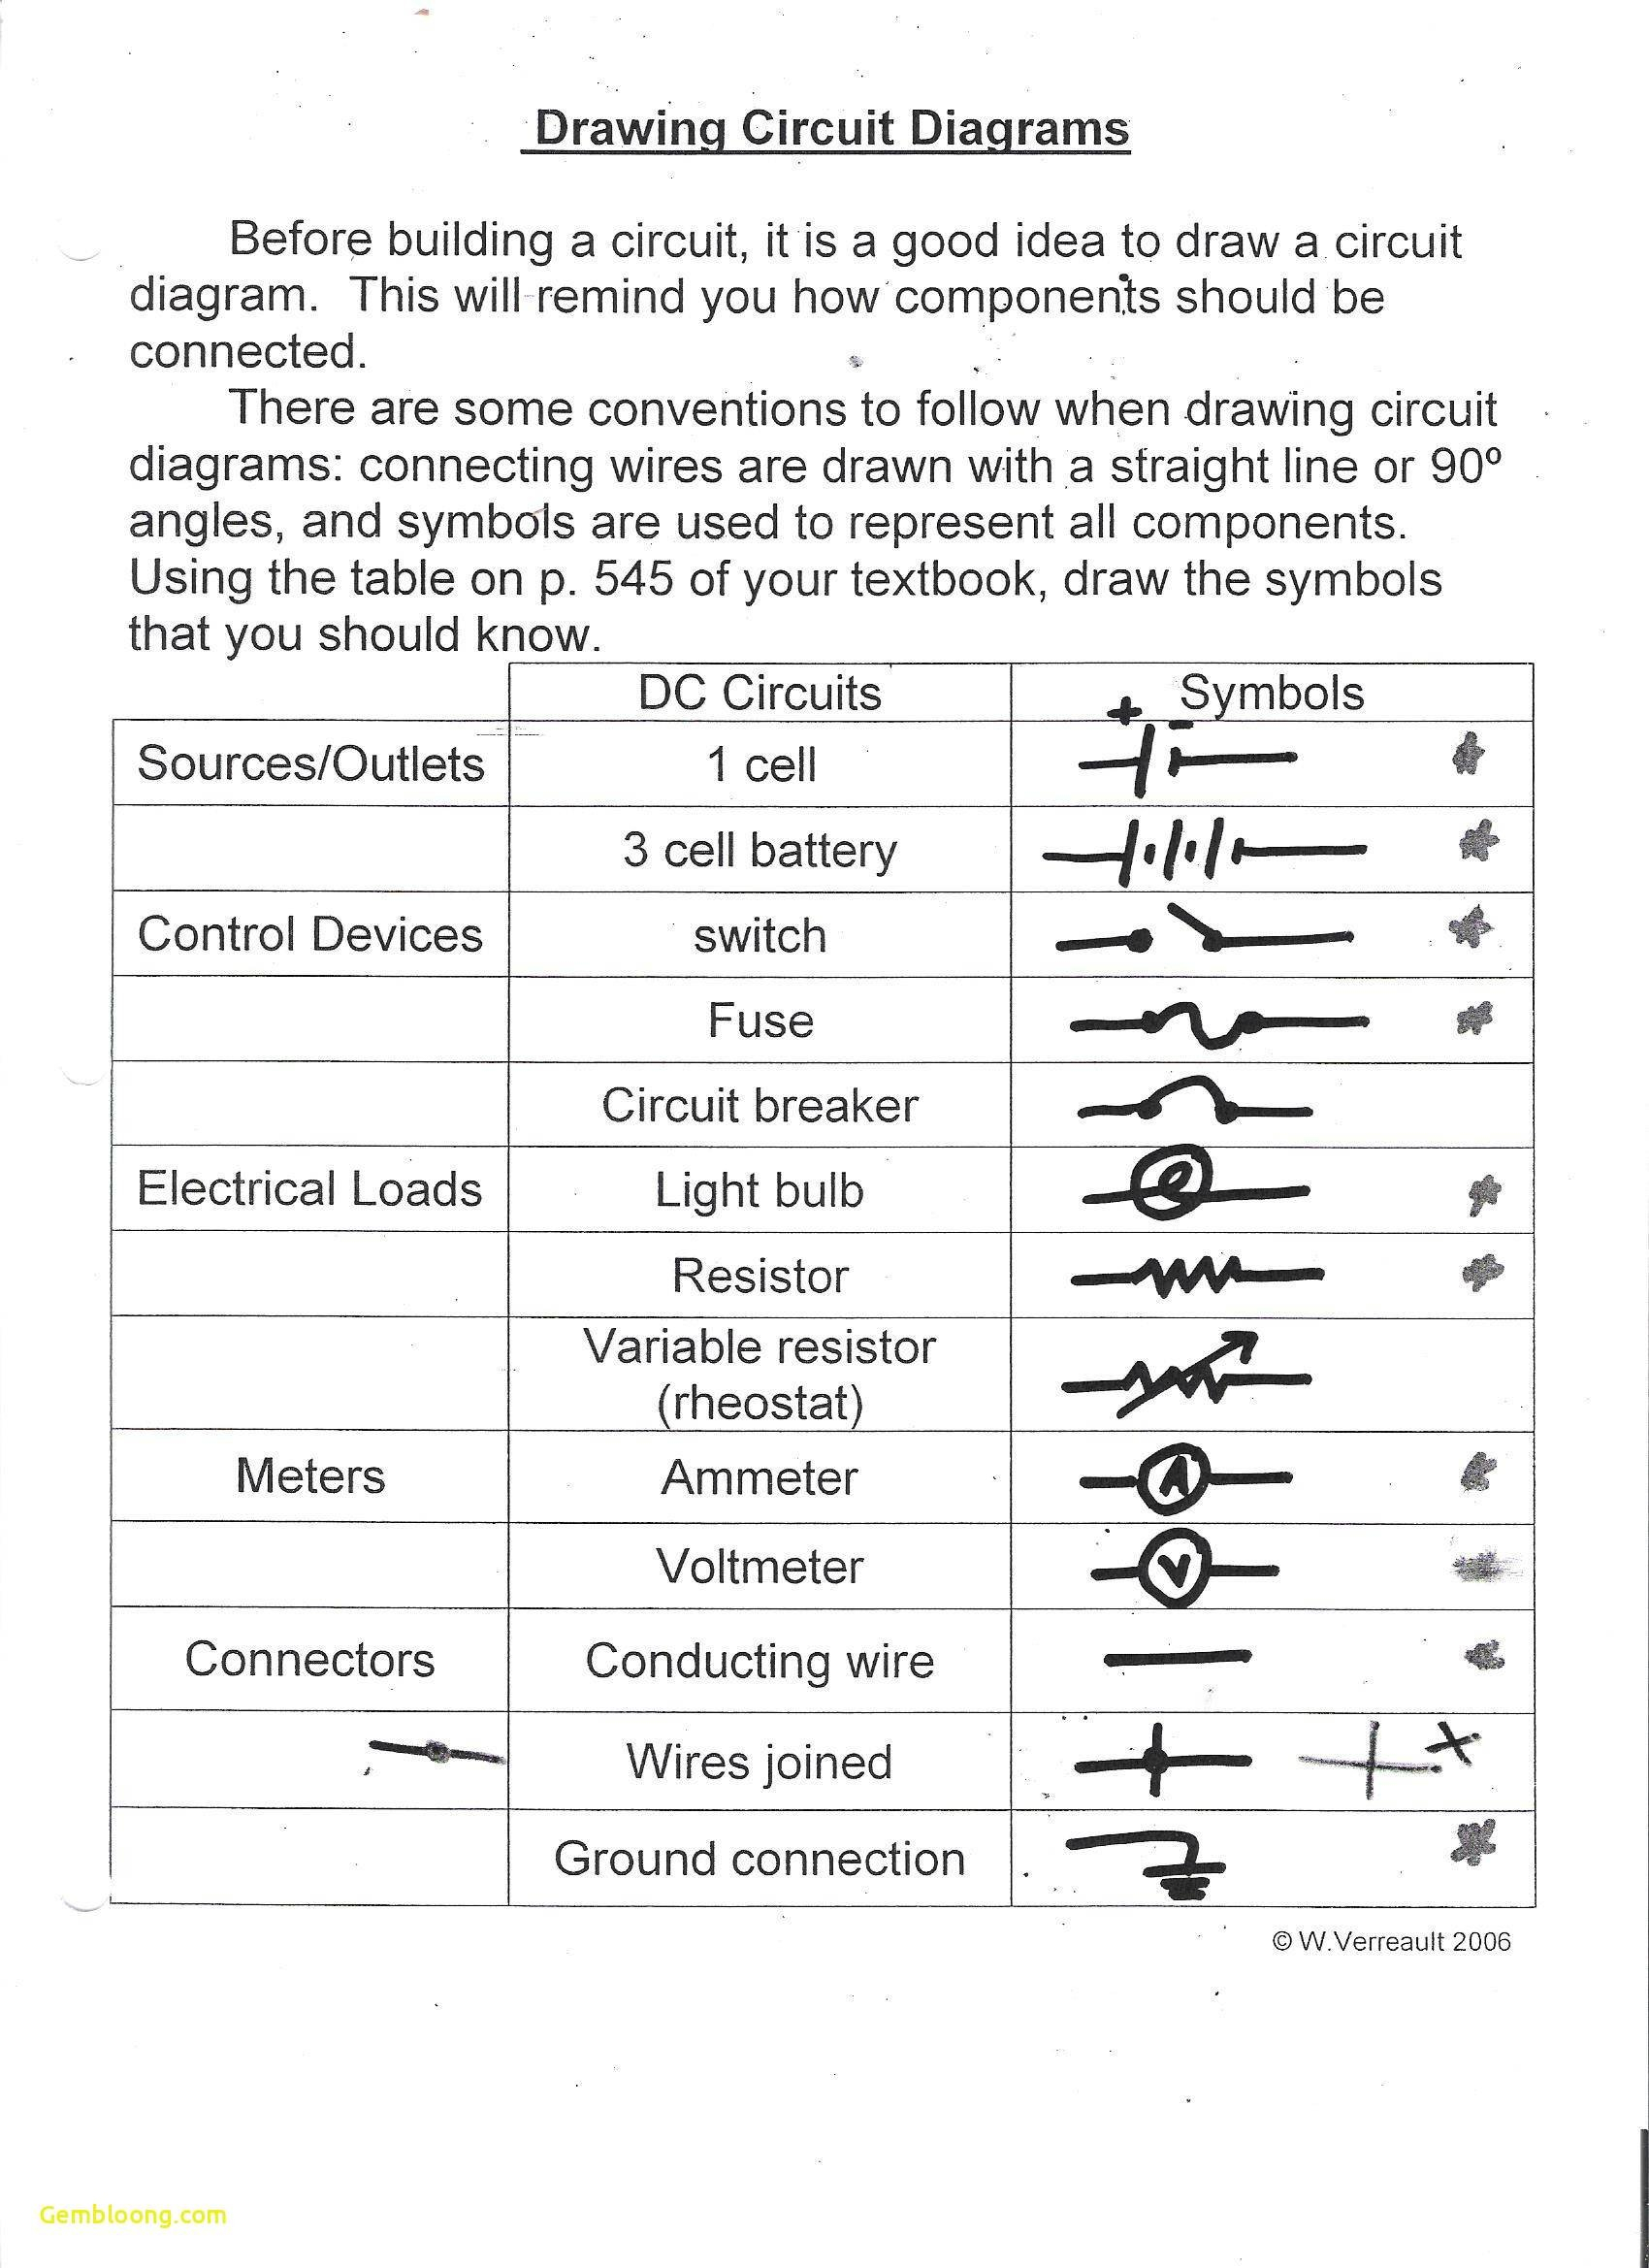 Circuits And Symbols Worksheet Answers  Cramerforcongress As Well As Circuits And Symbols Worksheet